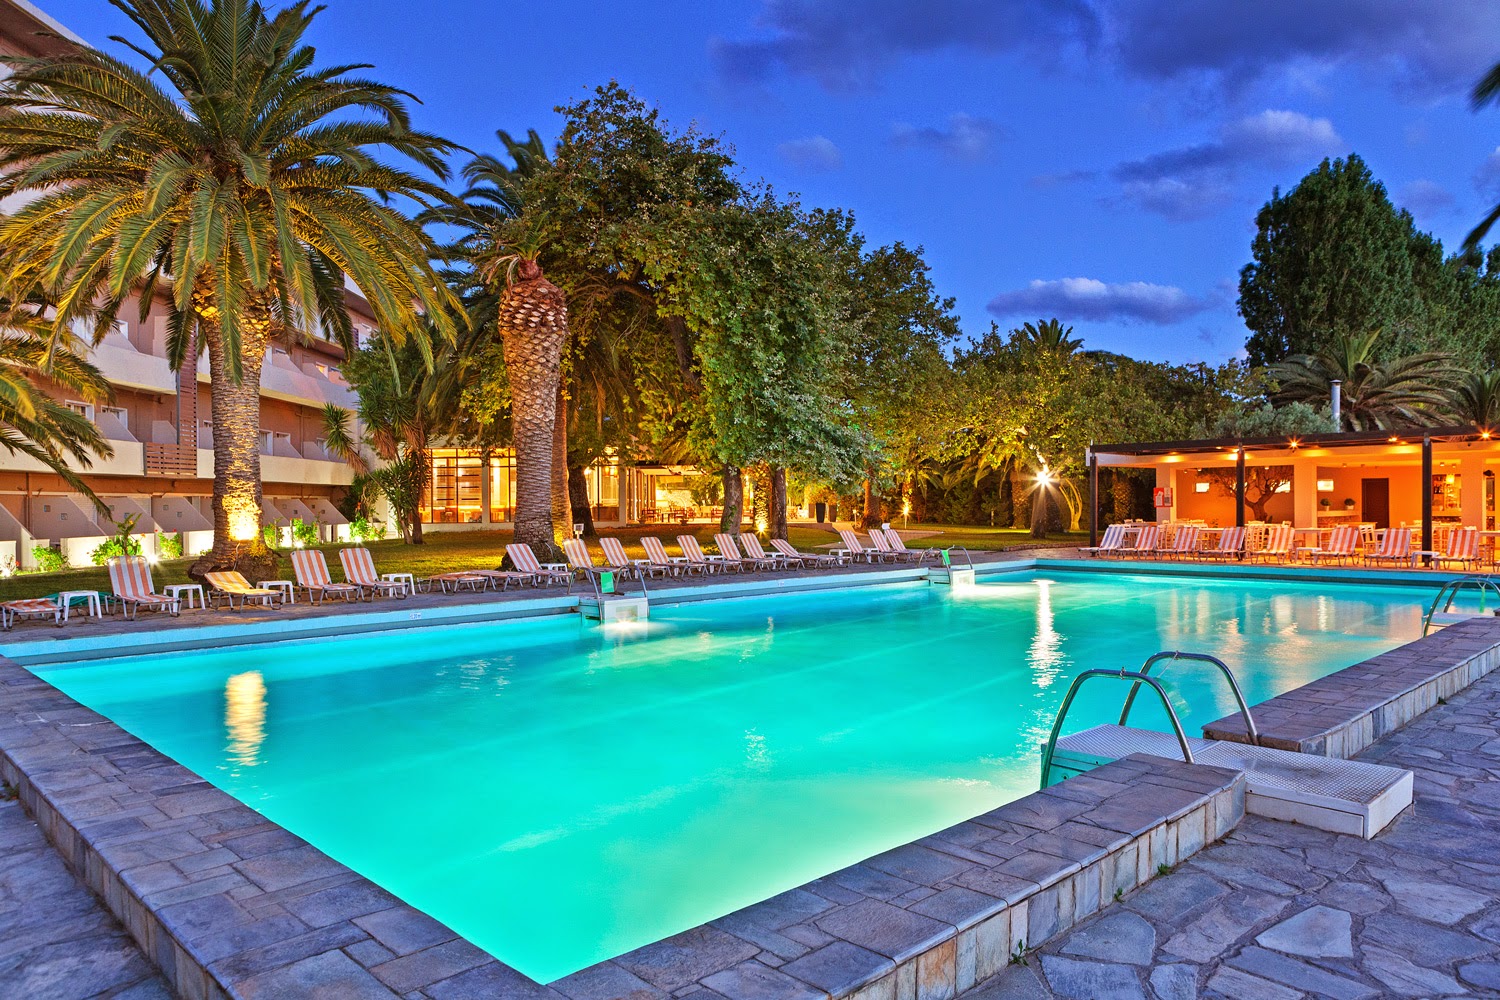 4* Long Beach Resort Hotel - Αίγιο ✦ -40% ✦ 4 Ημέρες (3 Διανυκτερεύσεις) ✦ 2 άτομα + 1 παιδί έως 12 ετών ✦ 12 ✦ 01/07/2023 έως 31/07/2023 ✦ Μπροστά στην Παραλία!